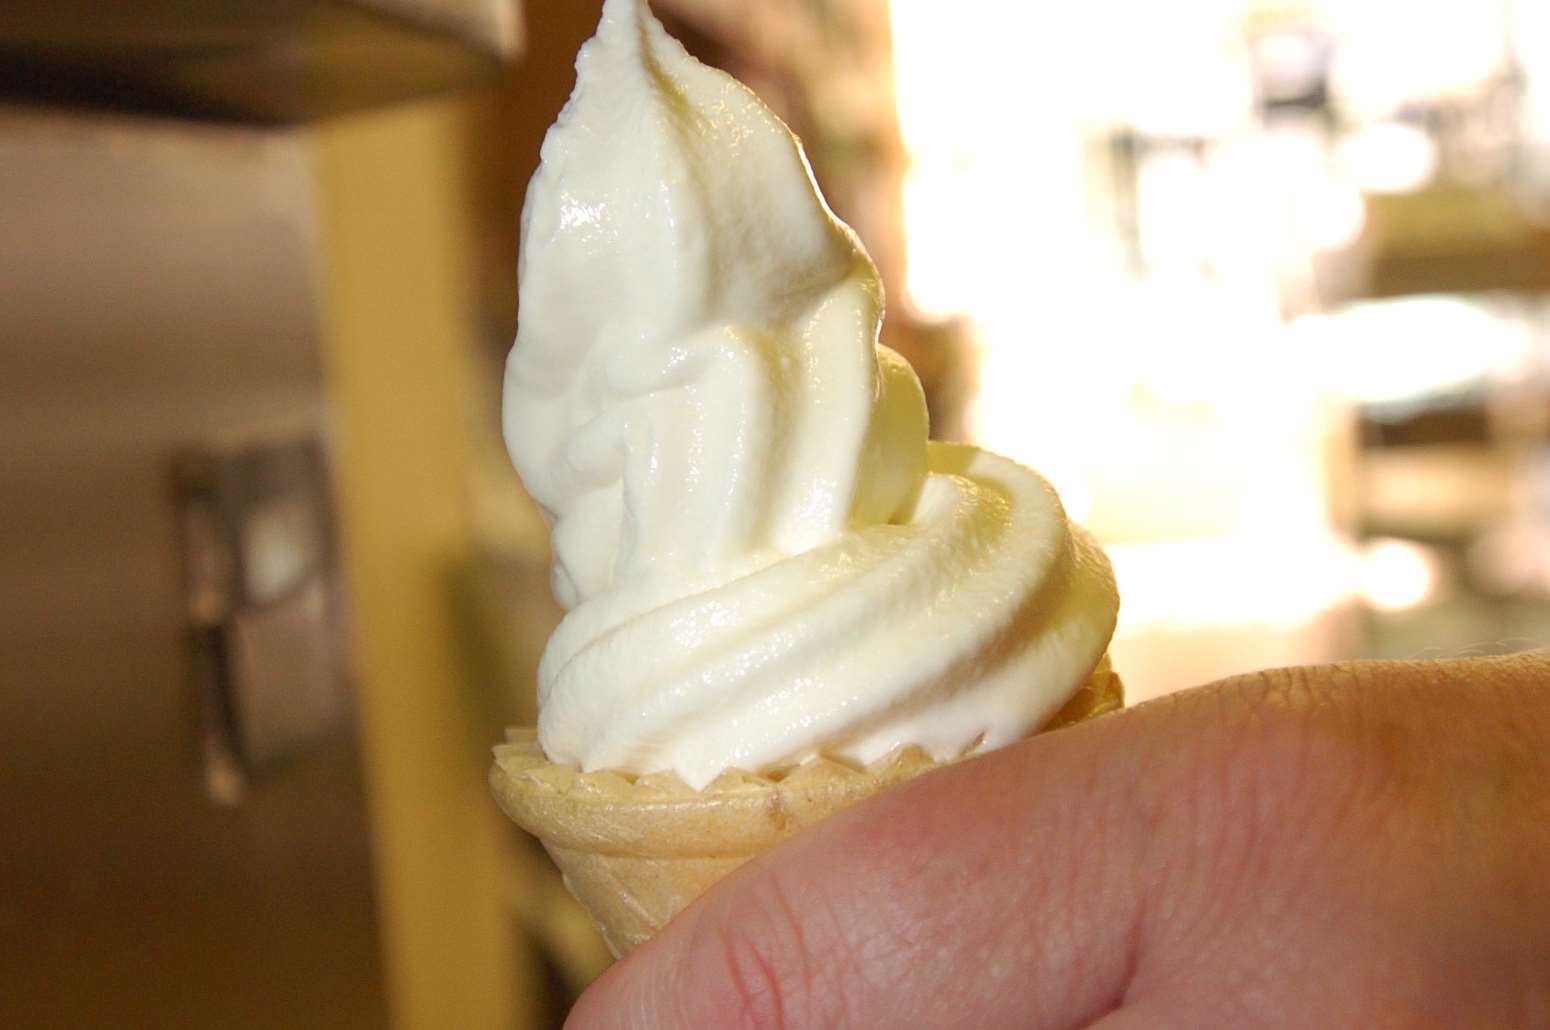 Ice cream sales set to soar in predicted heatwave